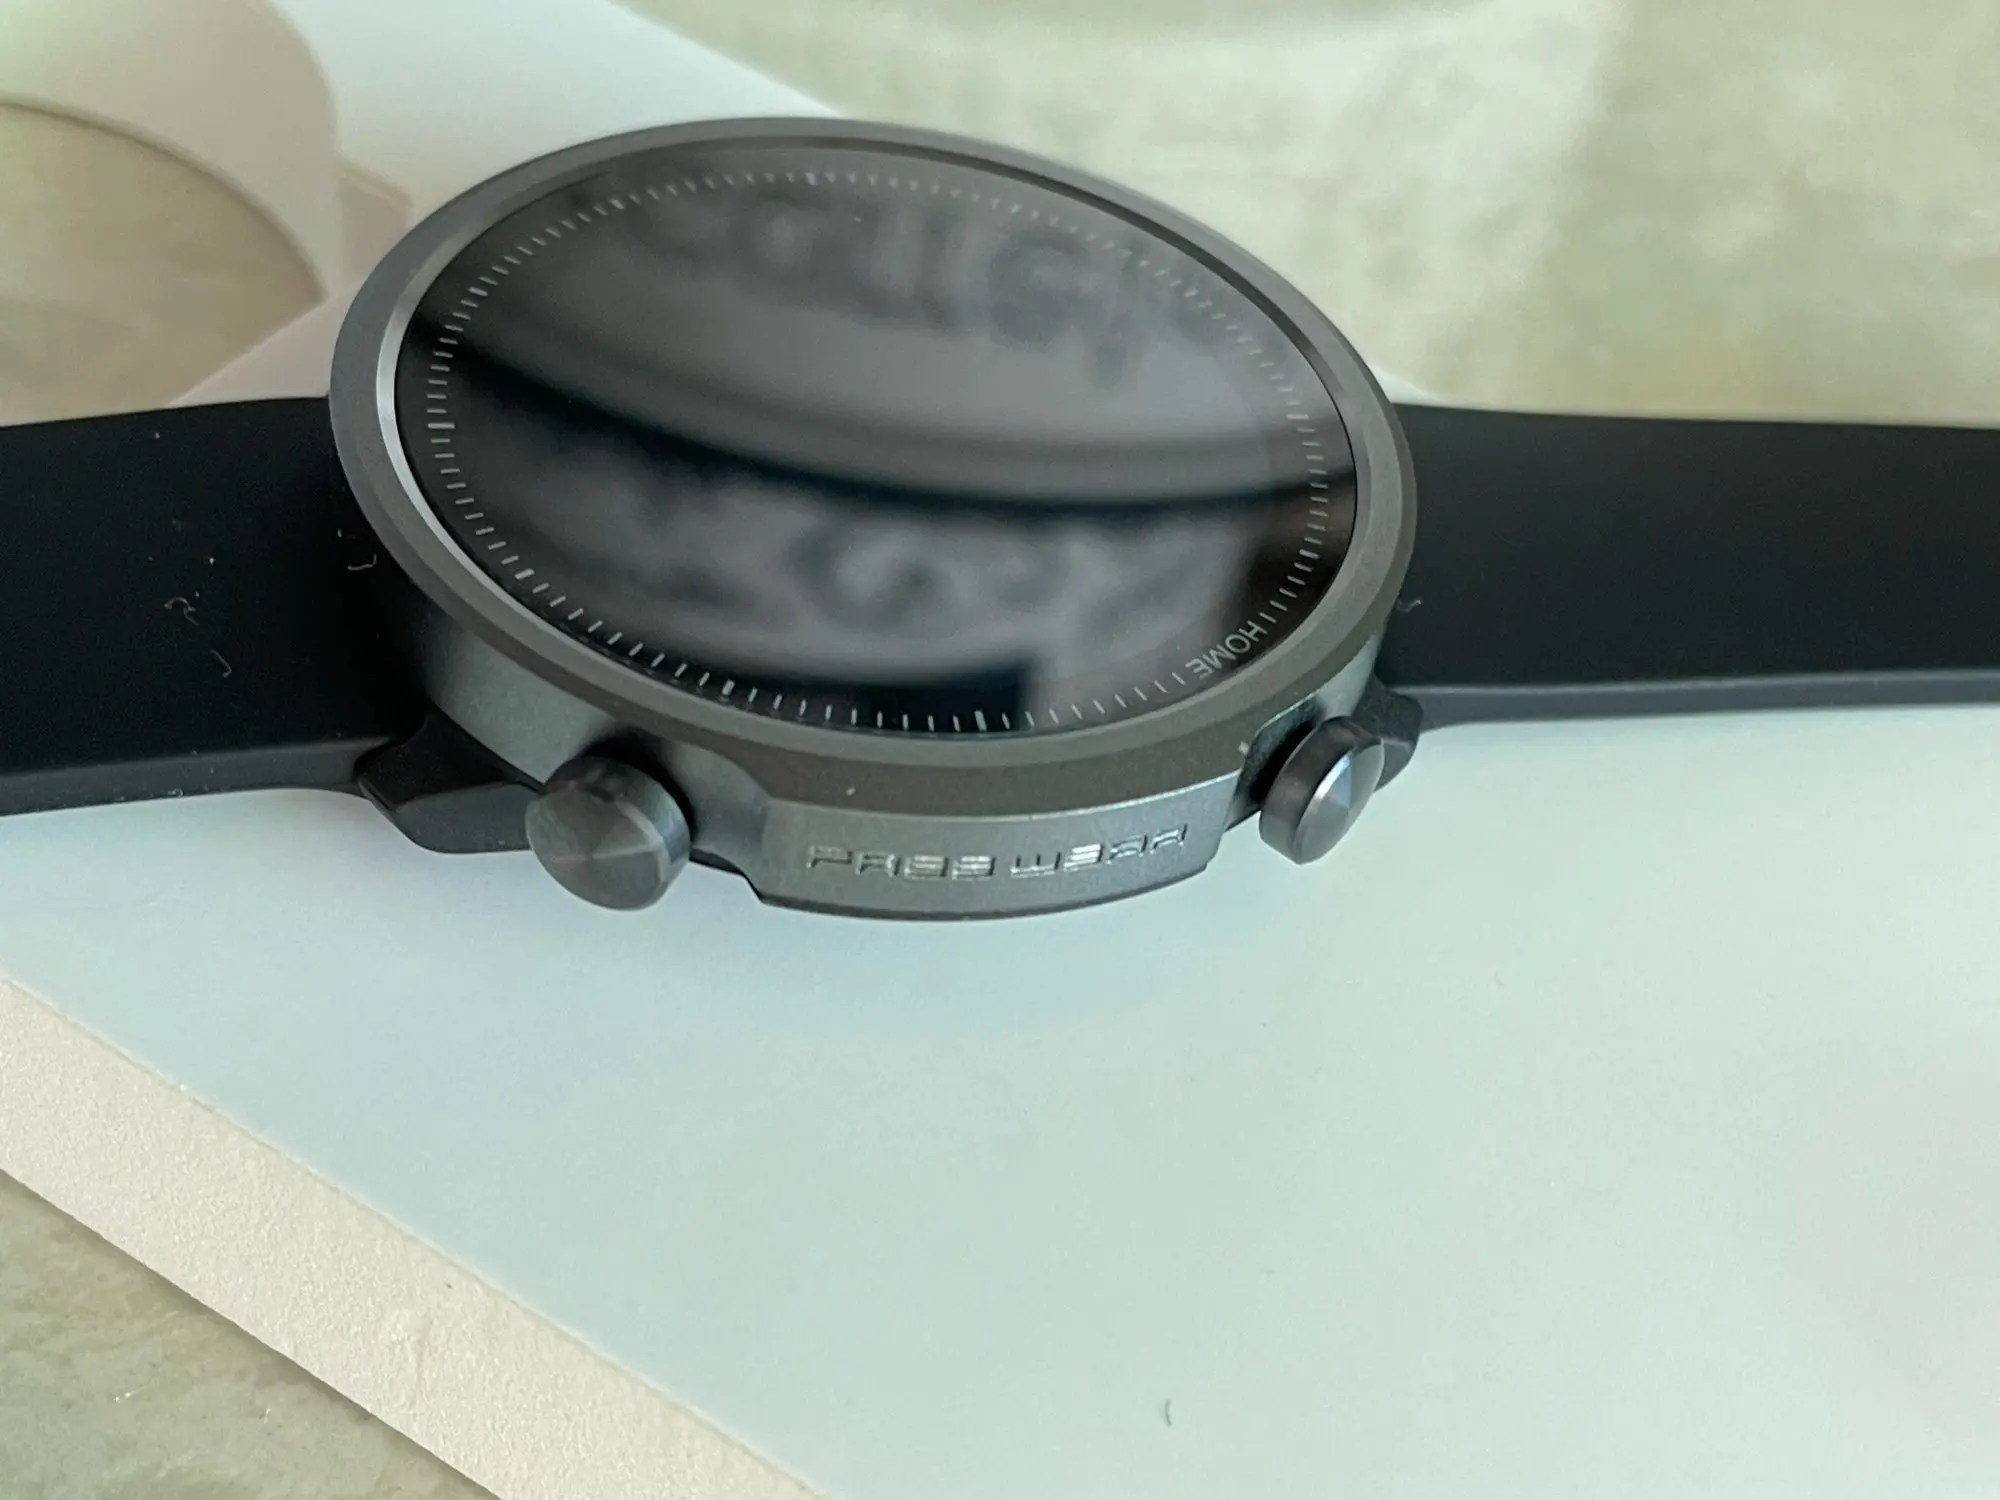 Mibro A1 Global Version Smartwatch photo review